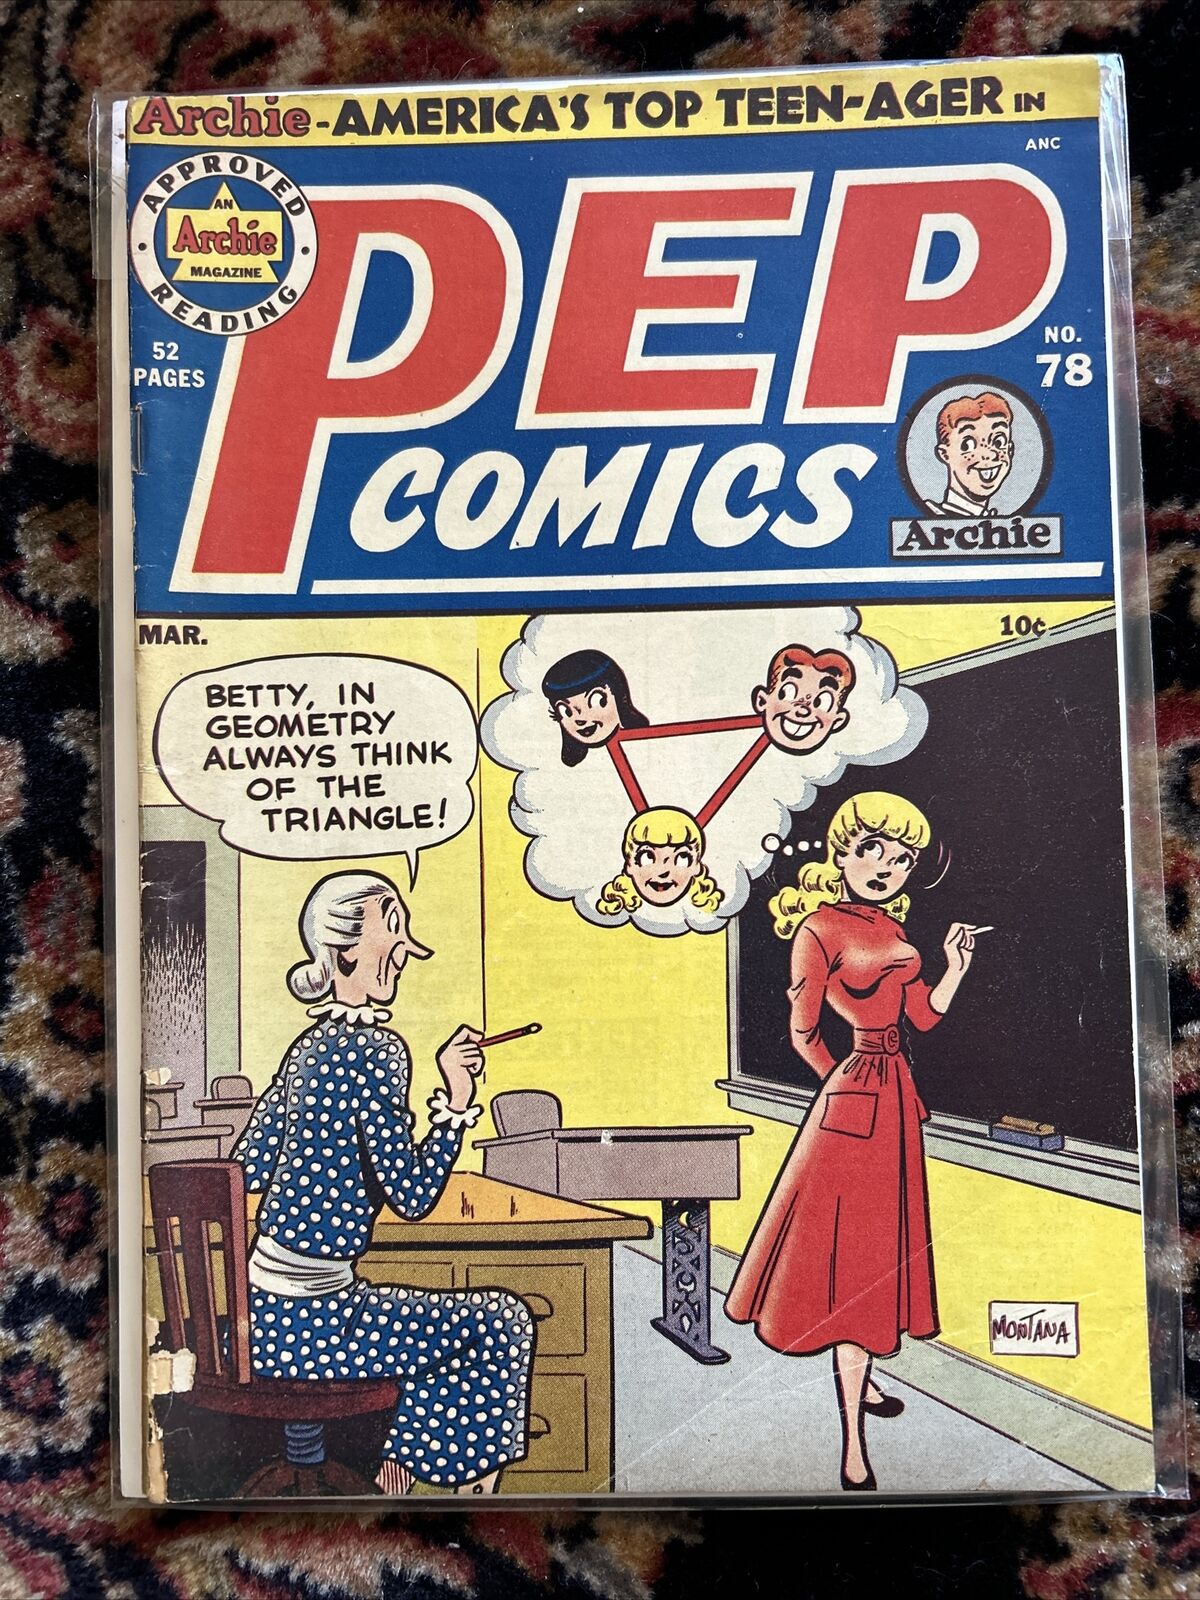 PEP COMICS #78 (1949) VG/VG+ ARCHIE, BETTY, VERONICA, Katy Keene Golden Age